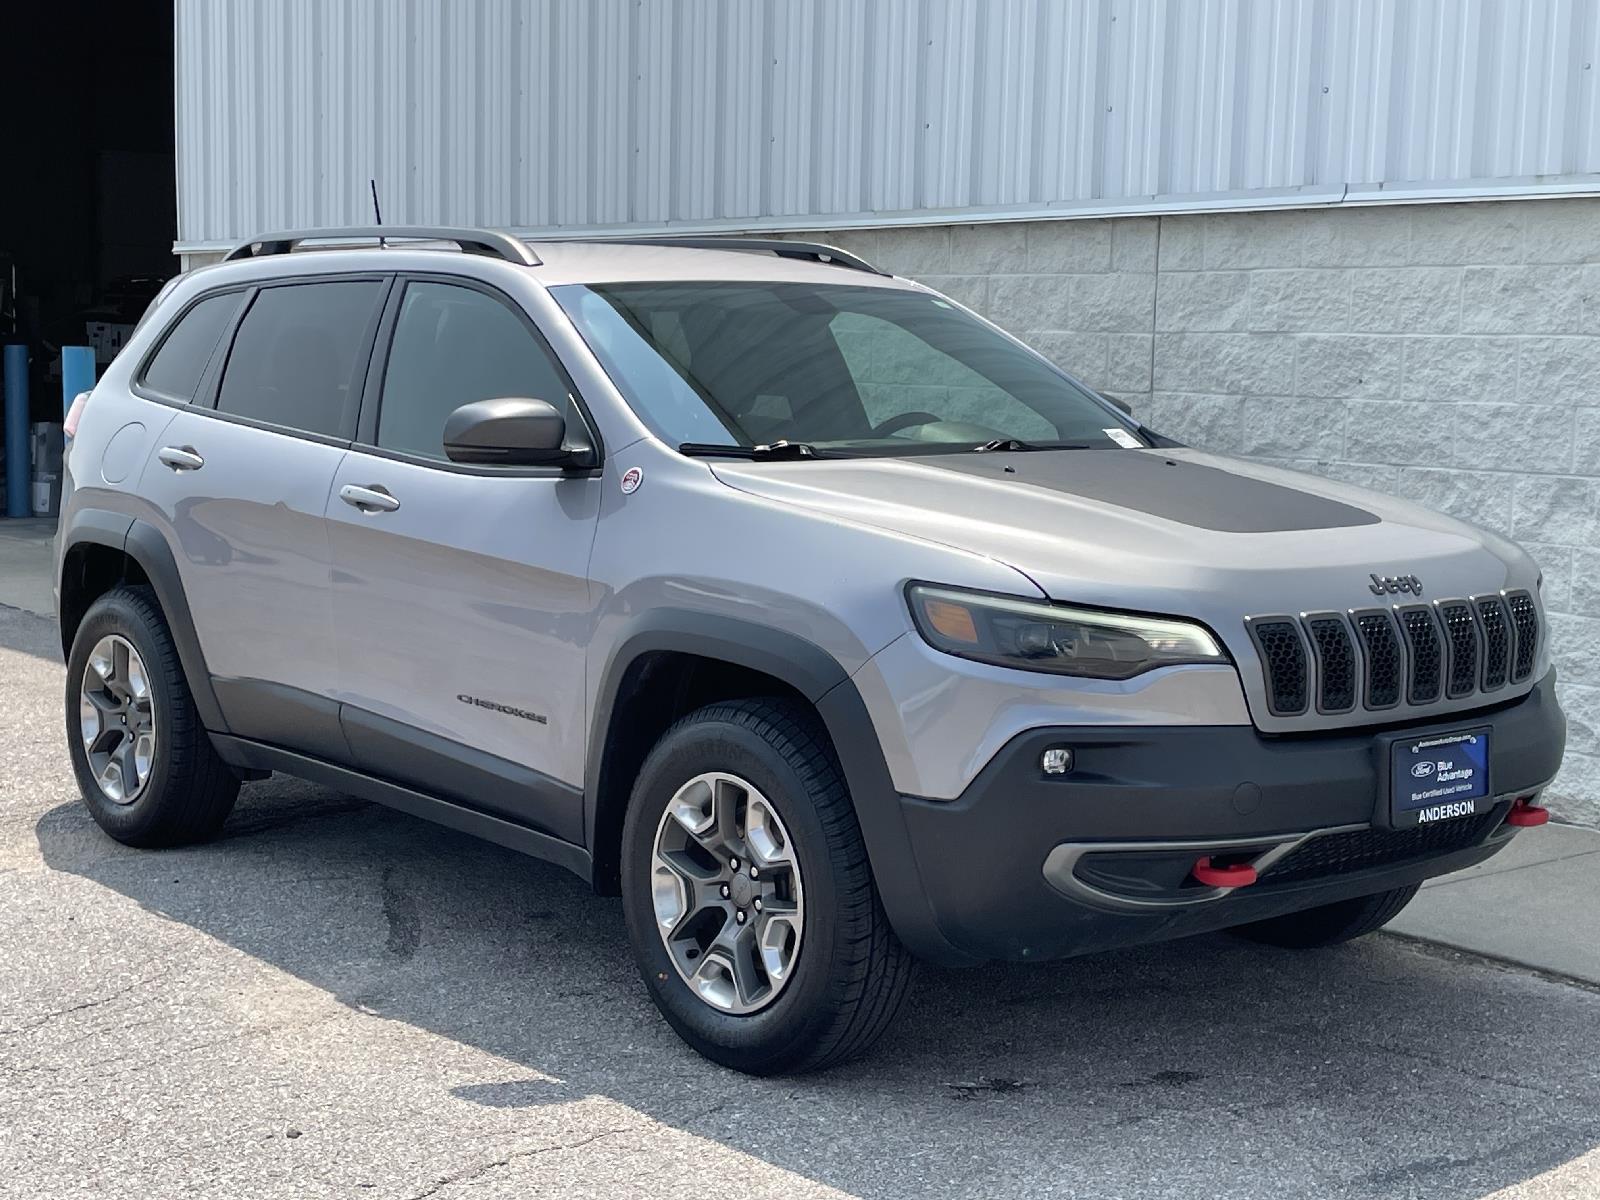 Used 2019 Jeep Cherokee Trailhawk SUV for sale in Lincoln NE